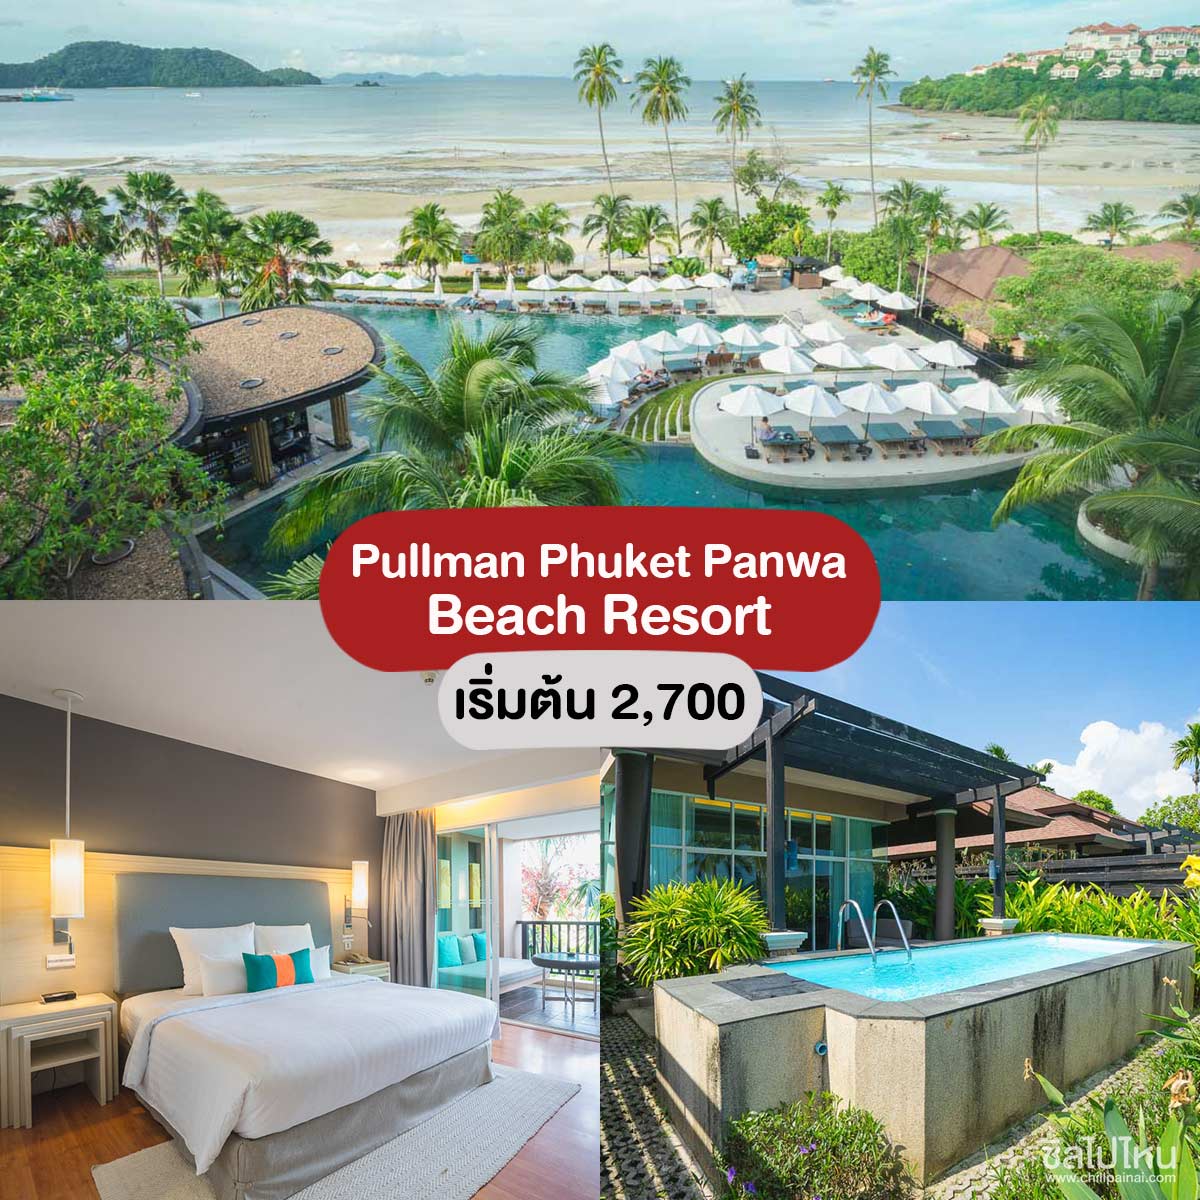 Pullman Phuket Panwa Beach Resort - ที่พักภูเก็ตวิวทะเล